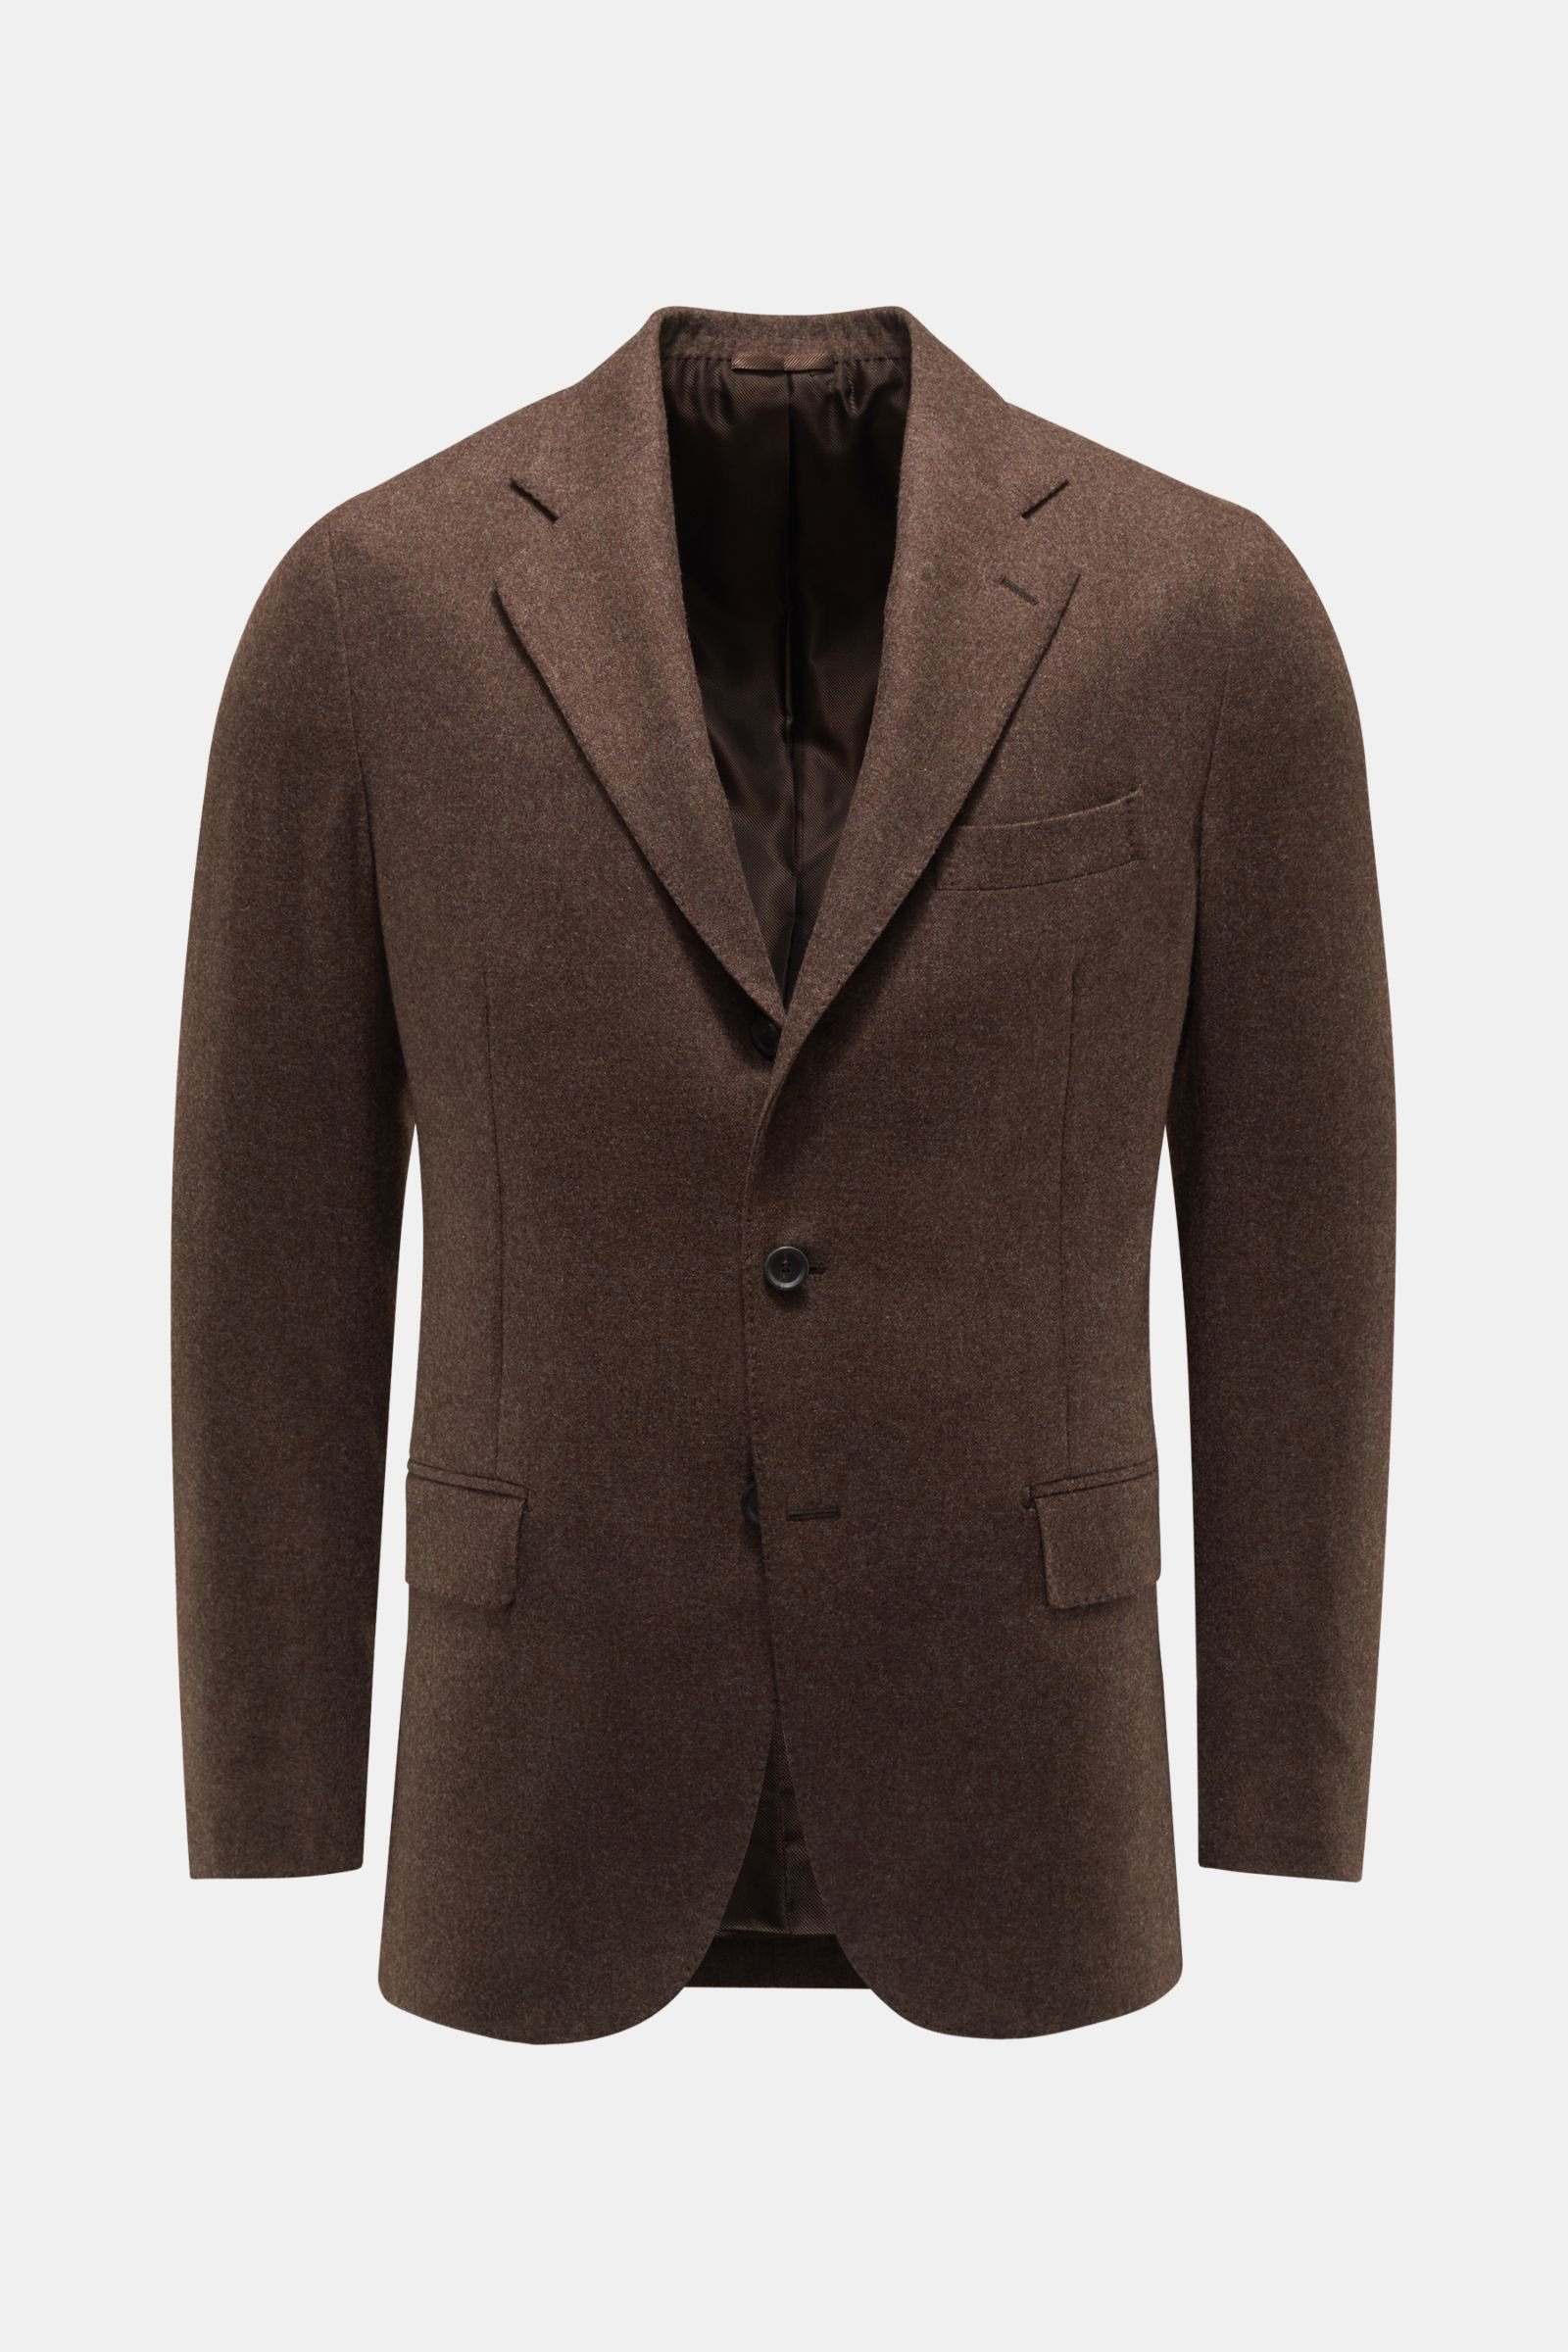 Smart-casual jacket dark brown 